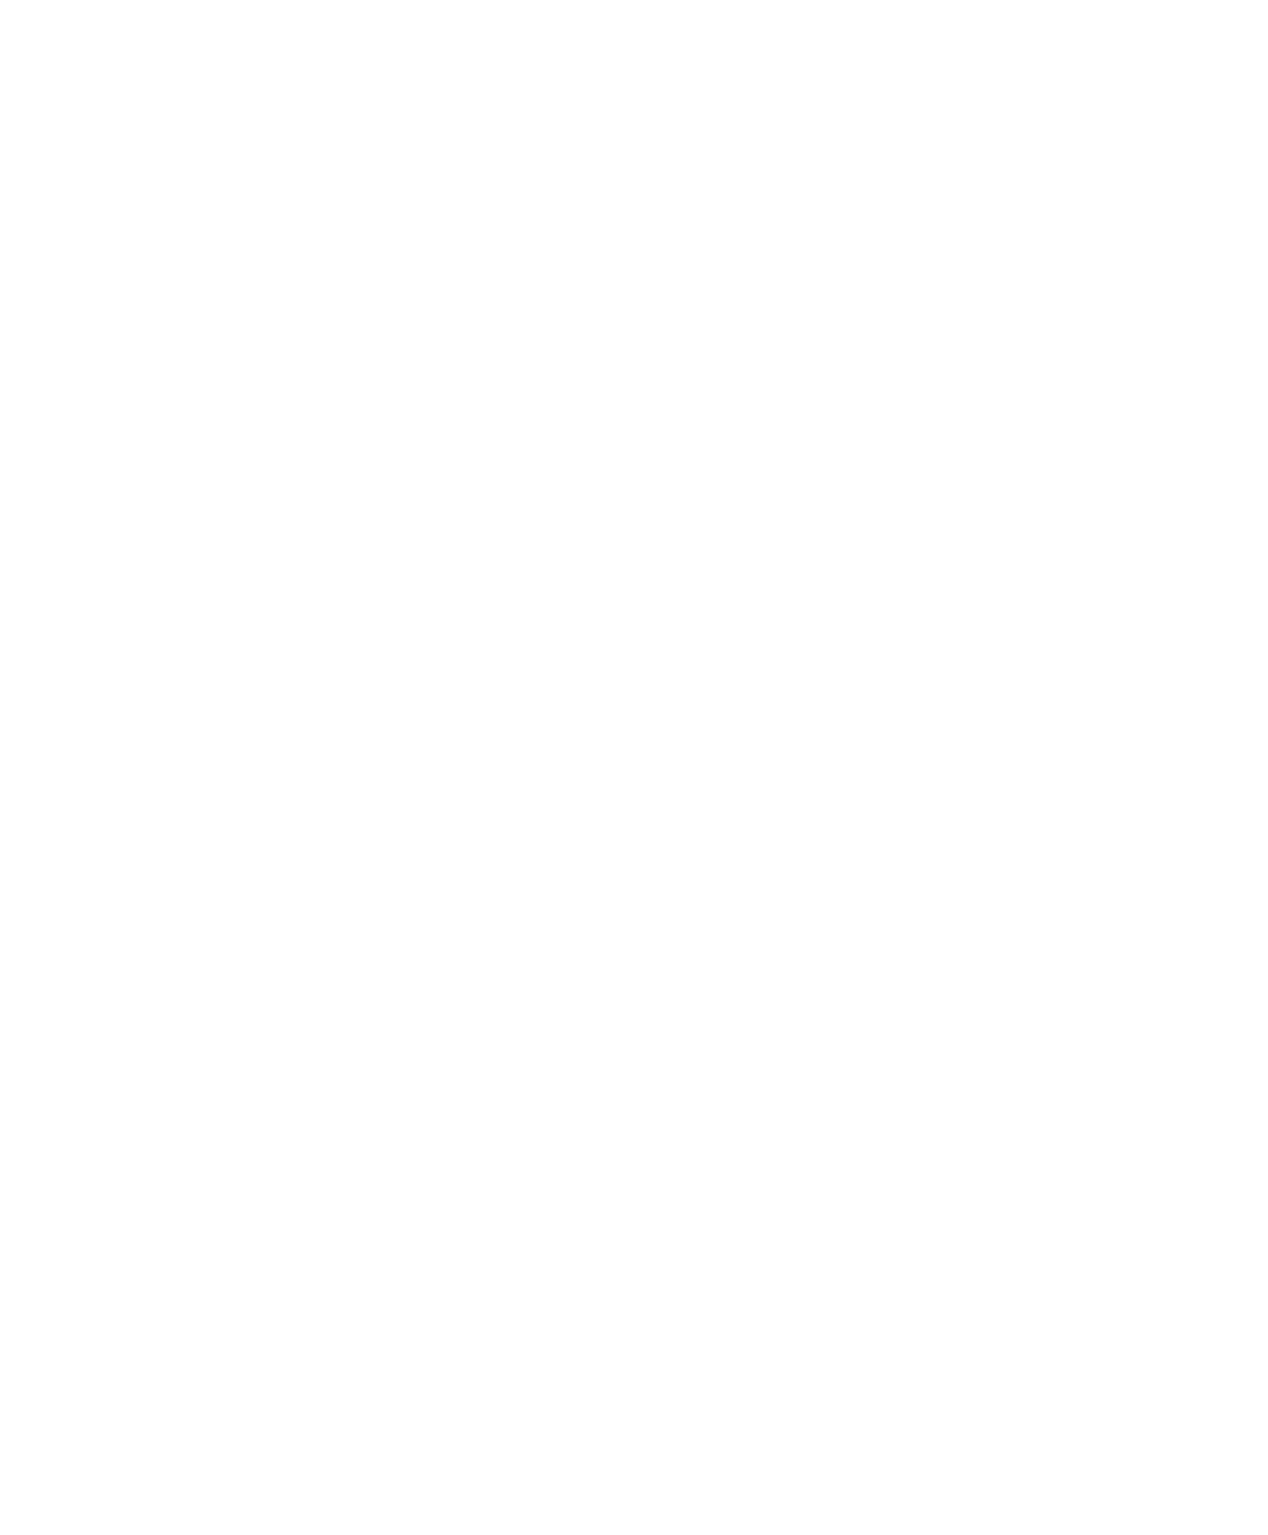 GATX logo for dark backgrounds (transparent PNG)